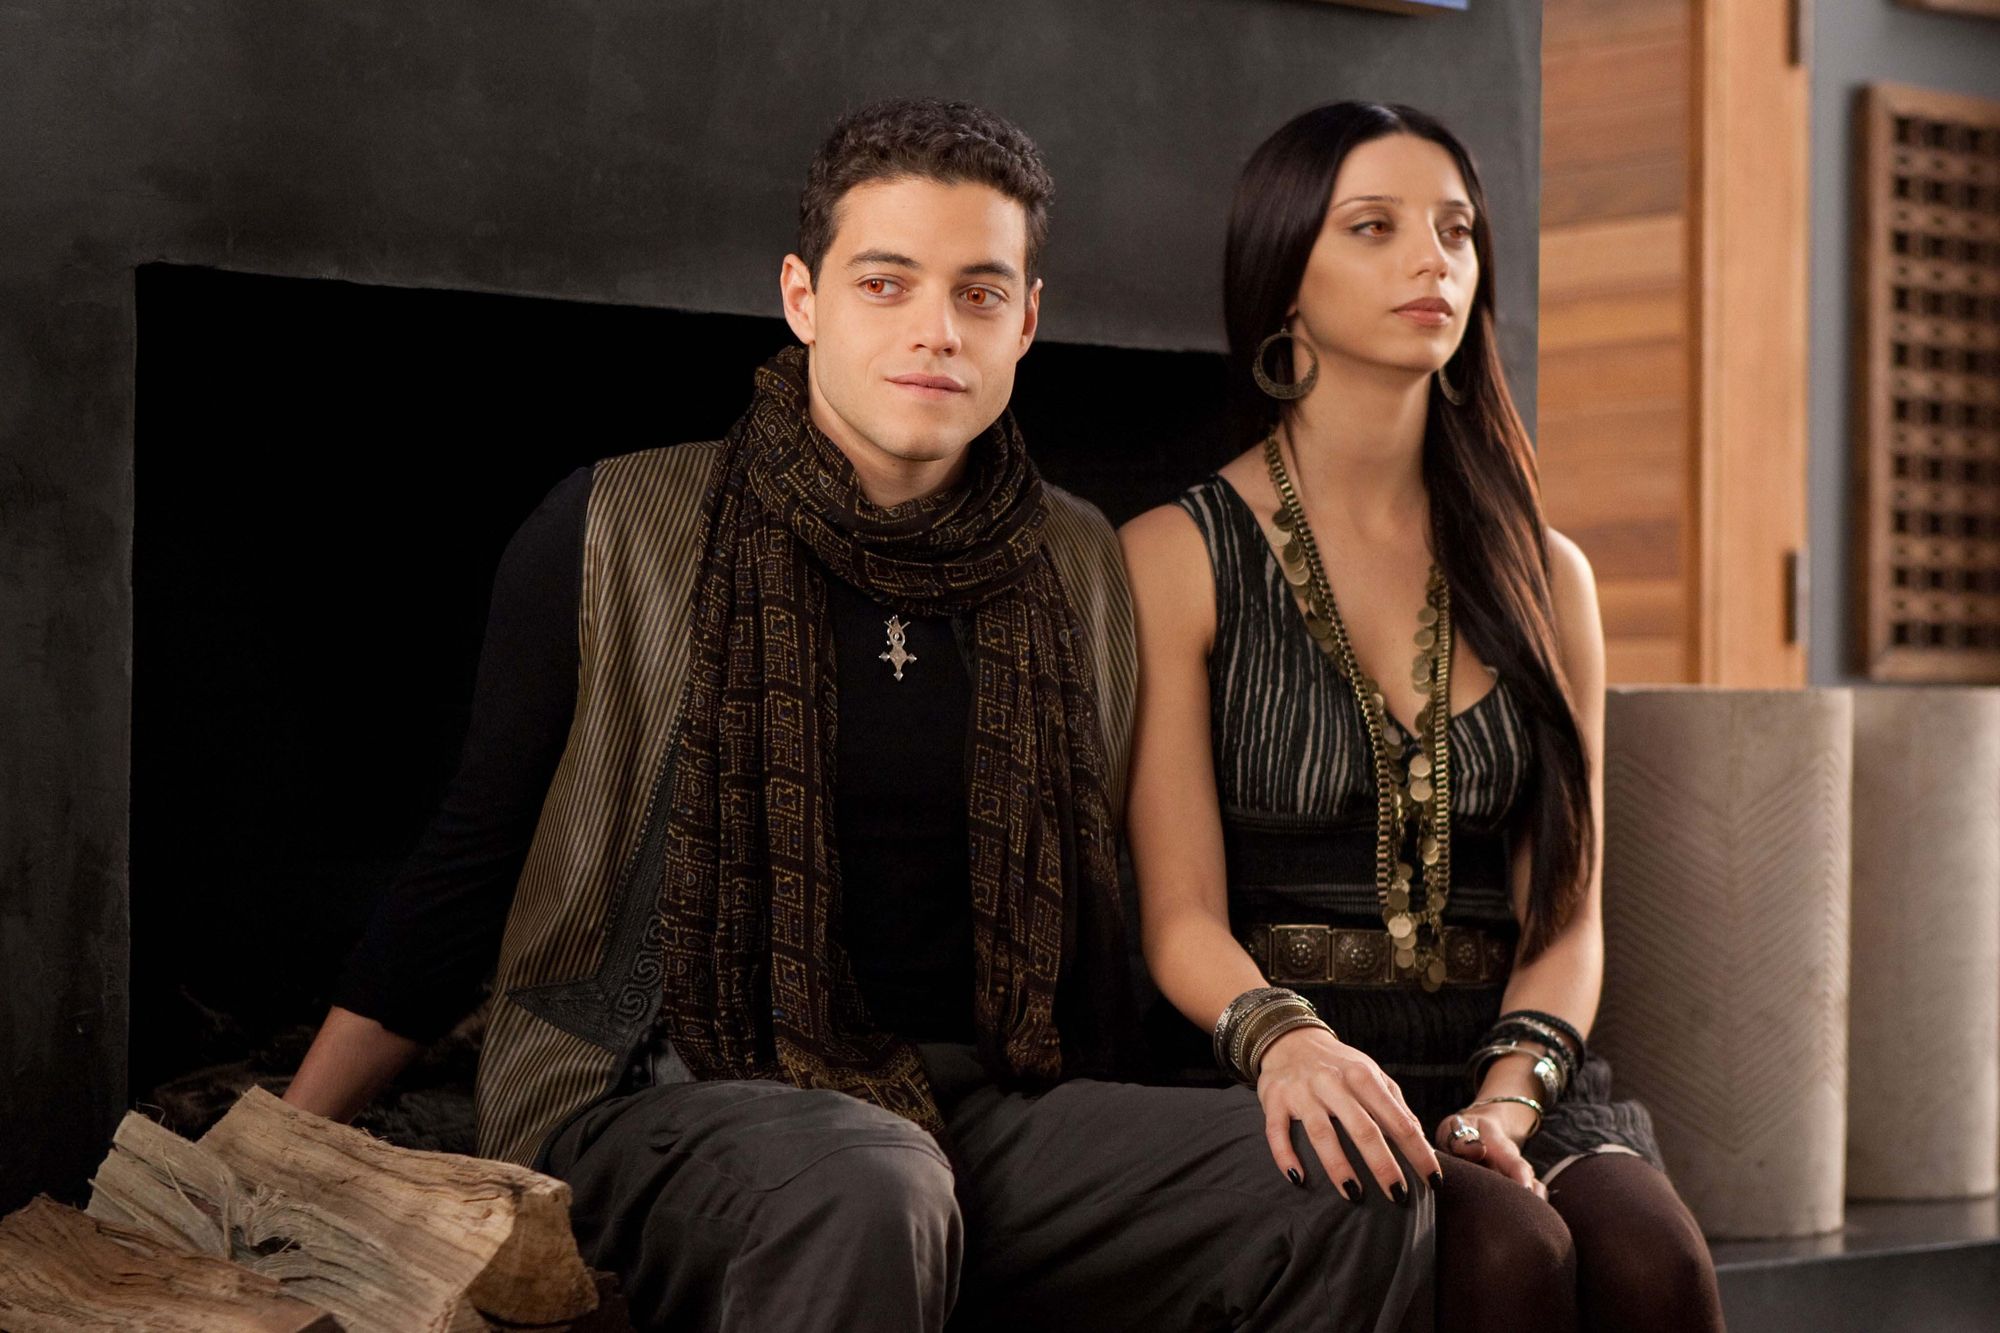 Rami Malek in The Twilight Saga: Breaking Dawn - Part 2